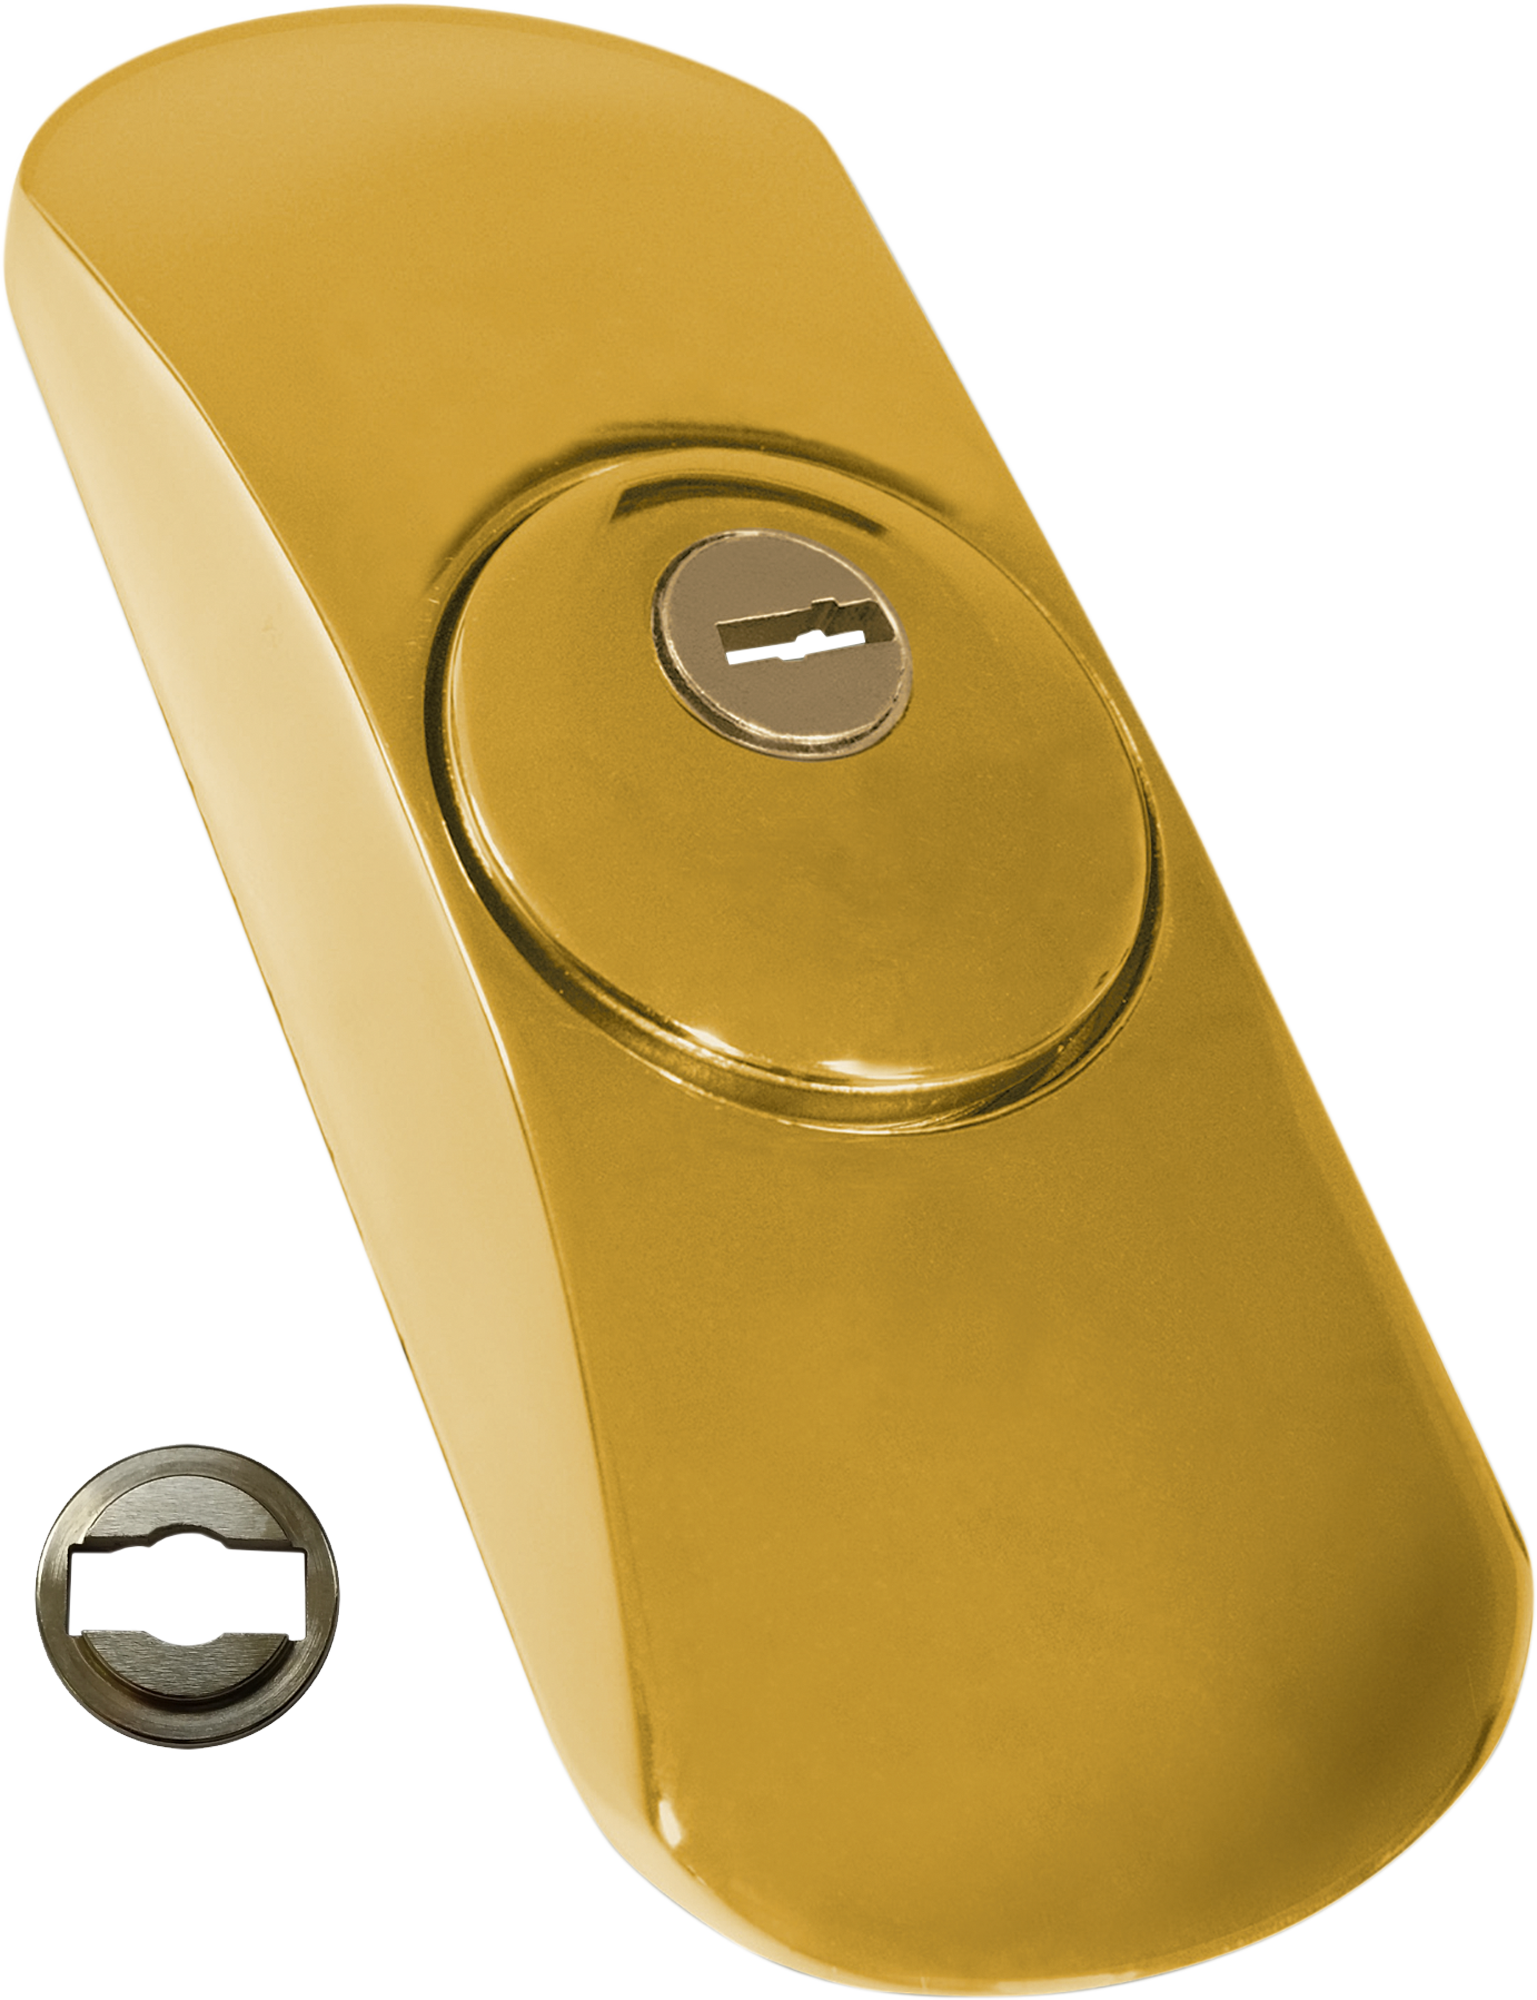 Escudo de seguridad para cilindro SQDO Dorado pintado